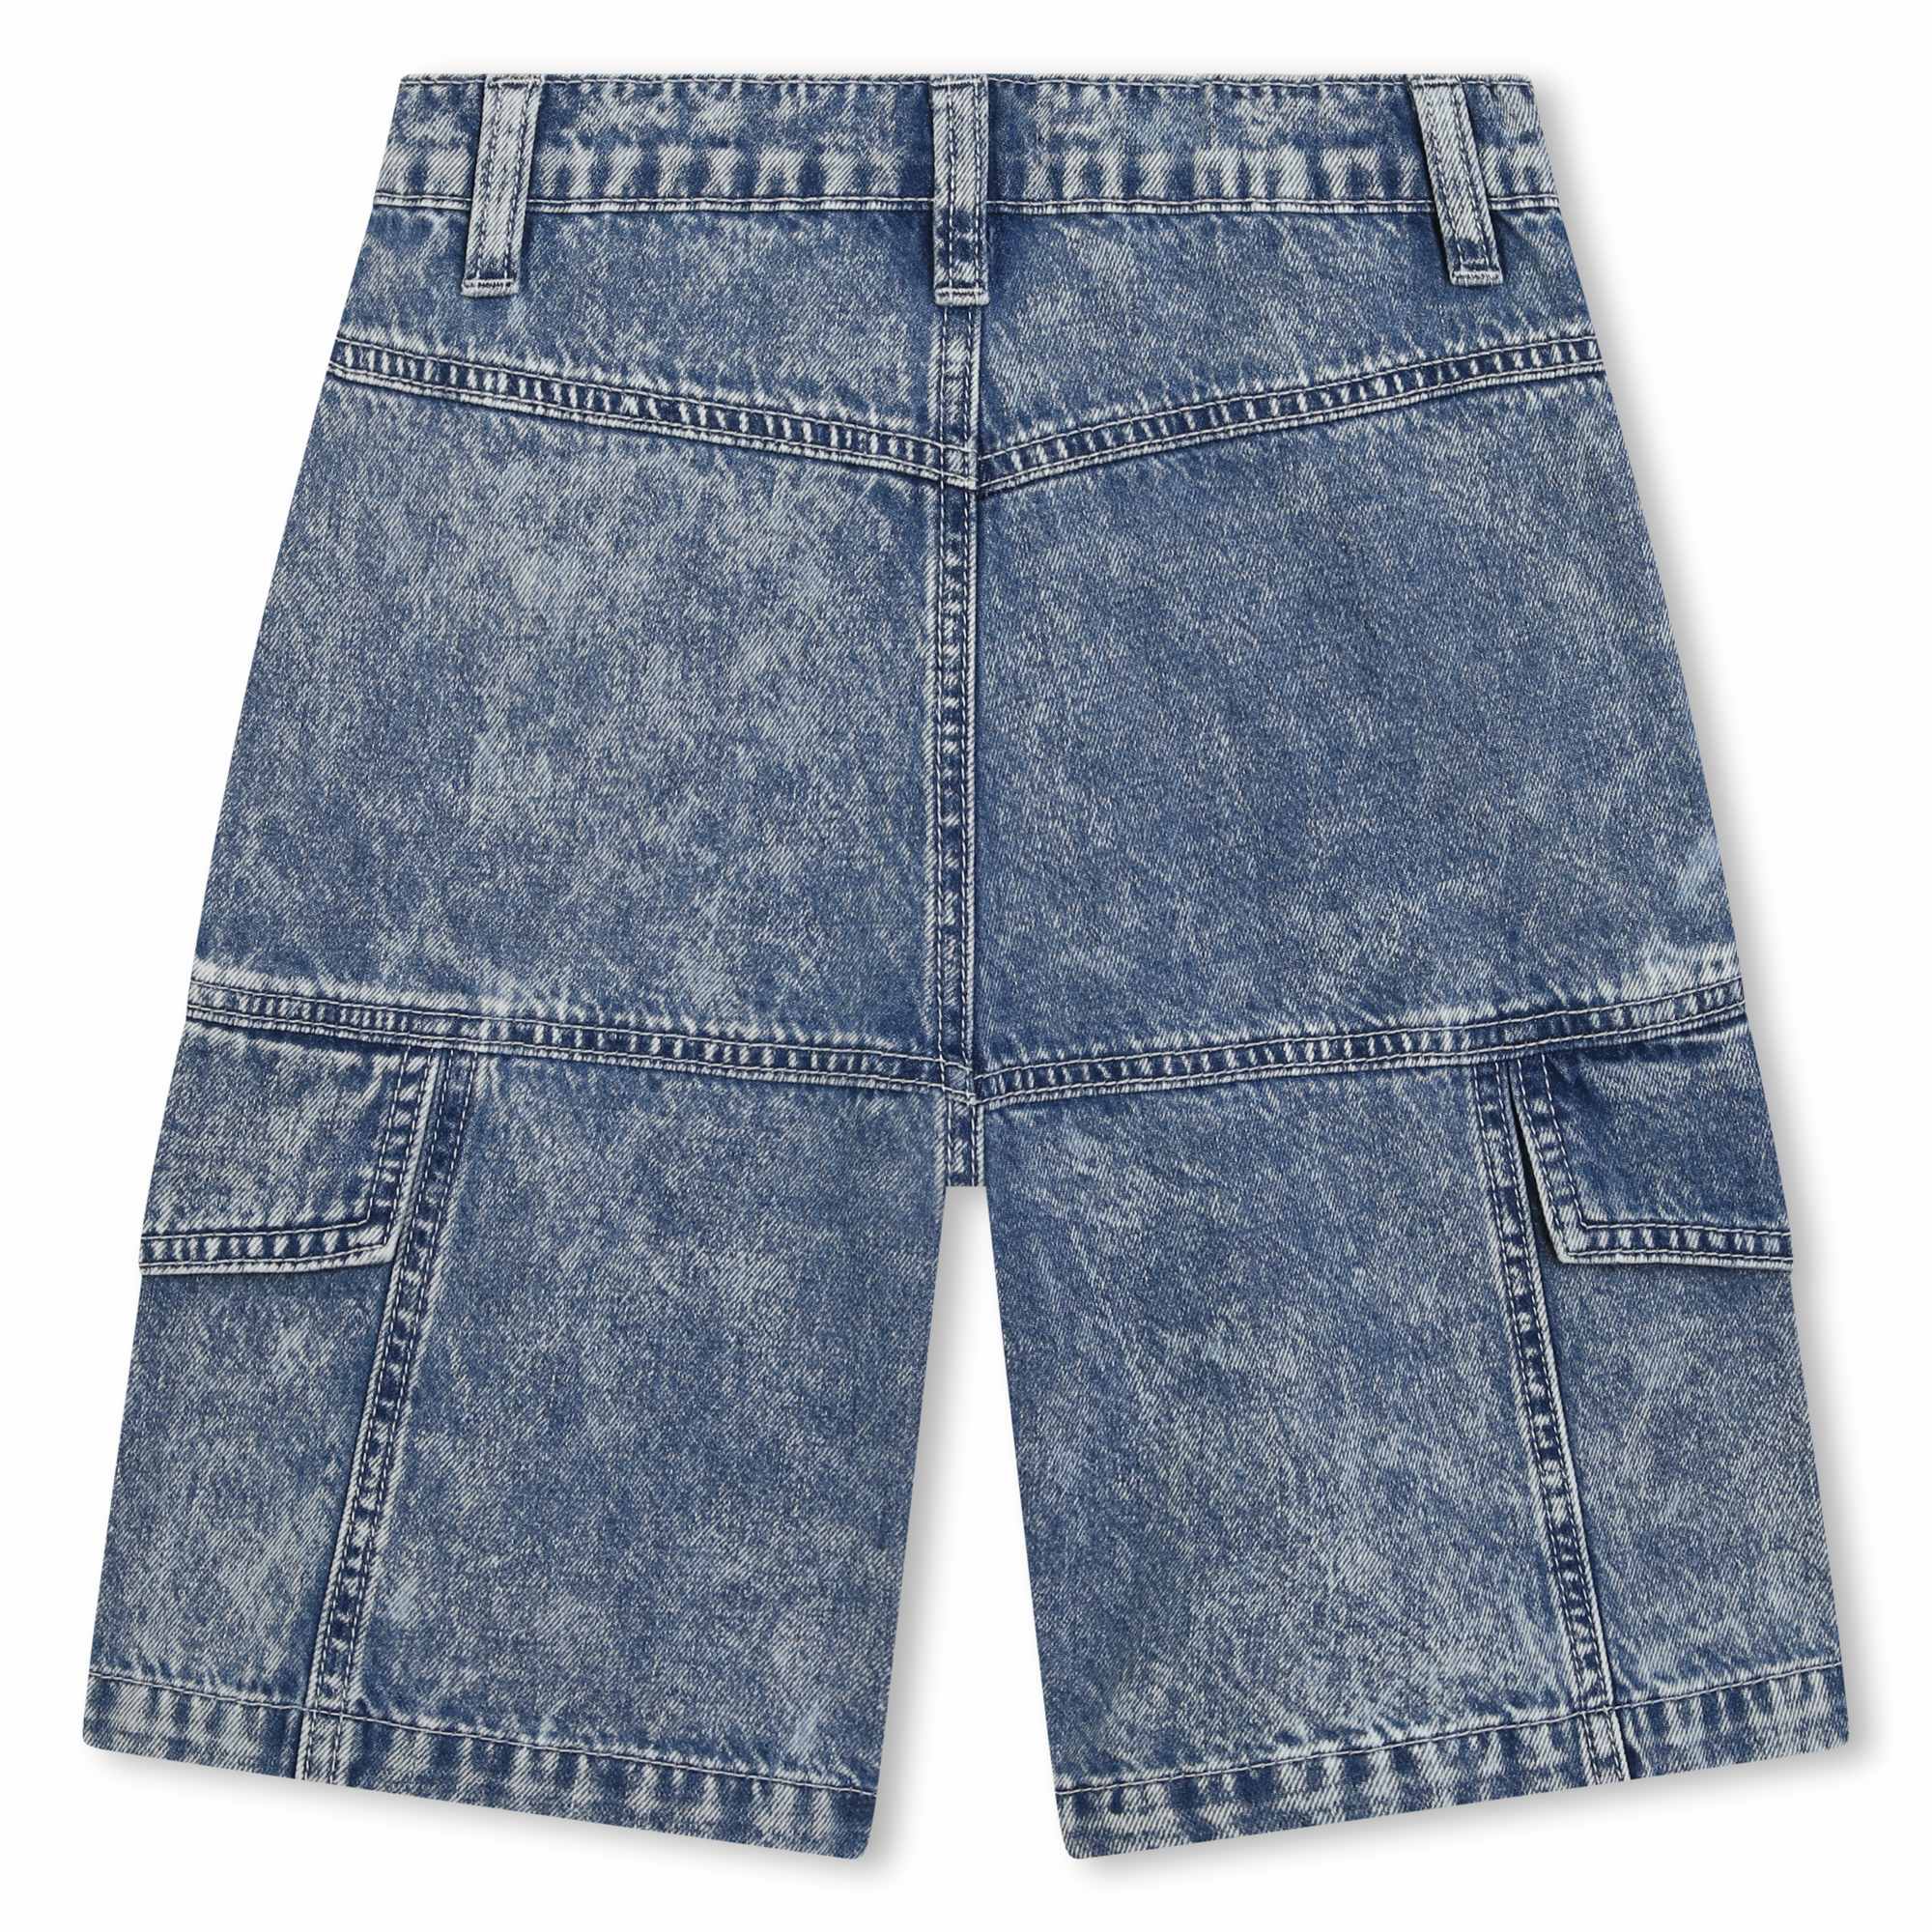 Adjustable denim shorts DKNY for BOY